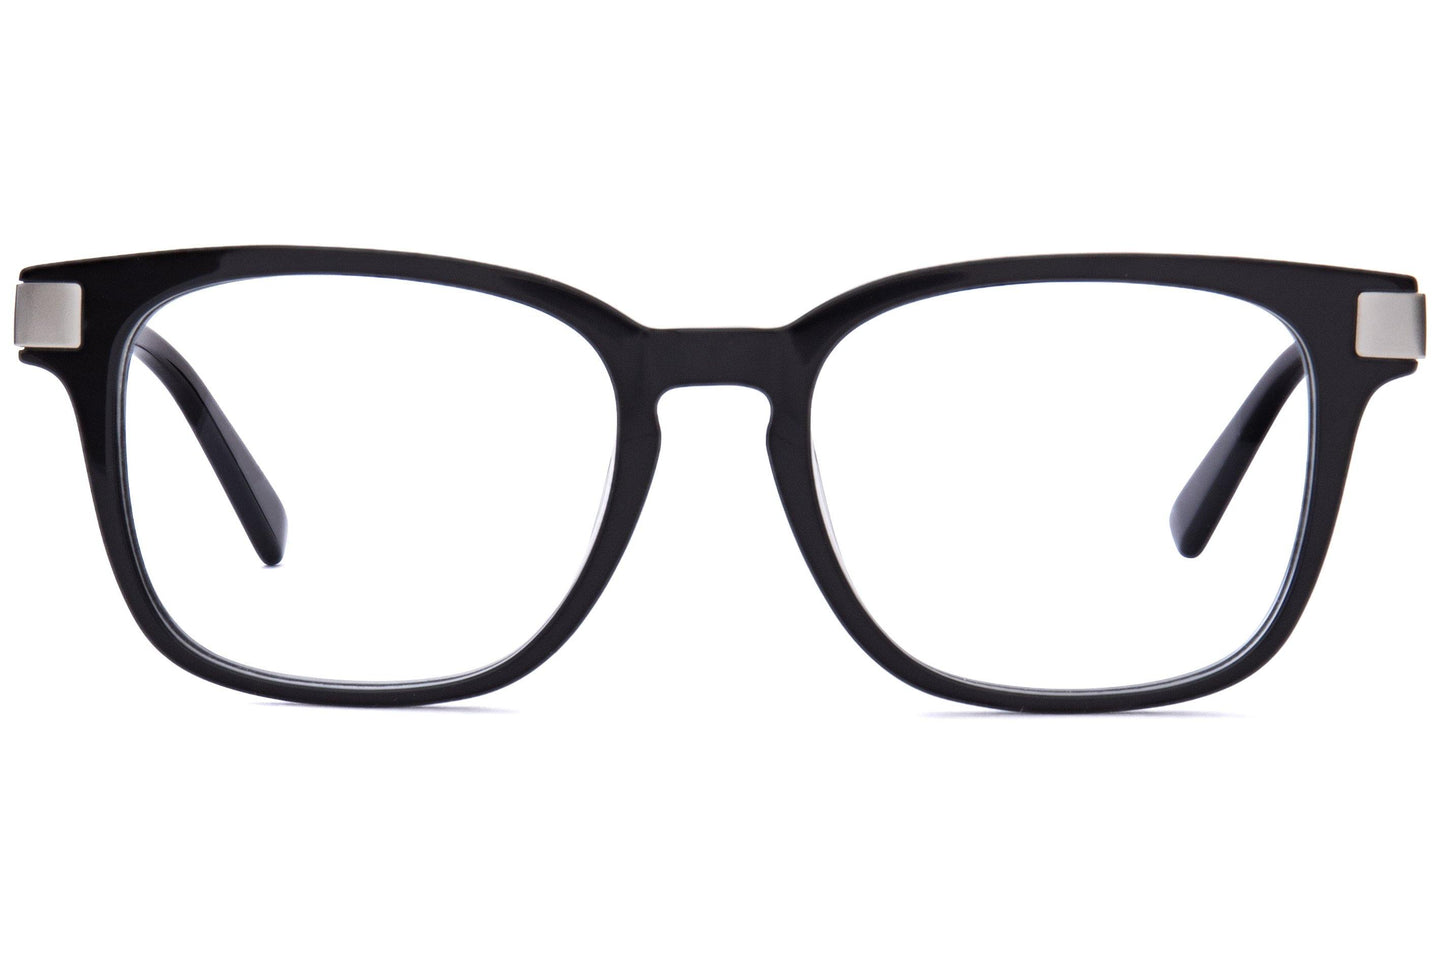 Fitzroy | Baxter Phillips | Fashionable Prescription Eyewear